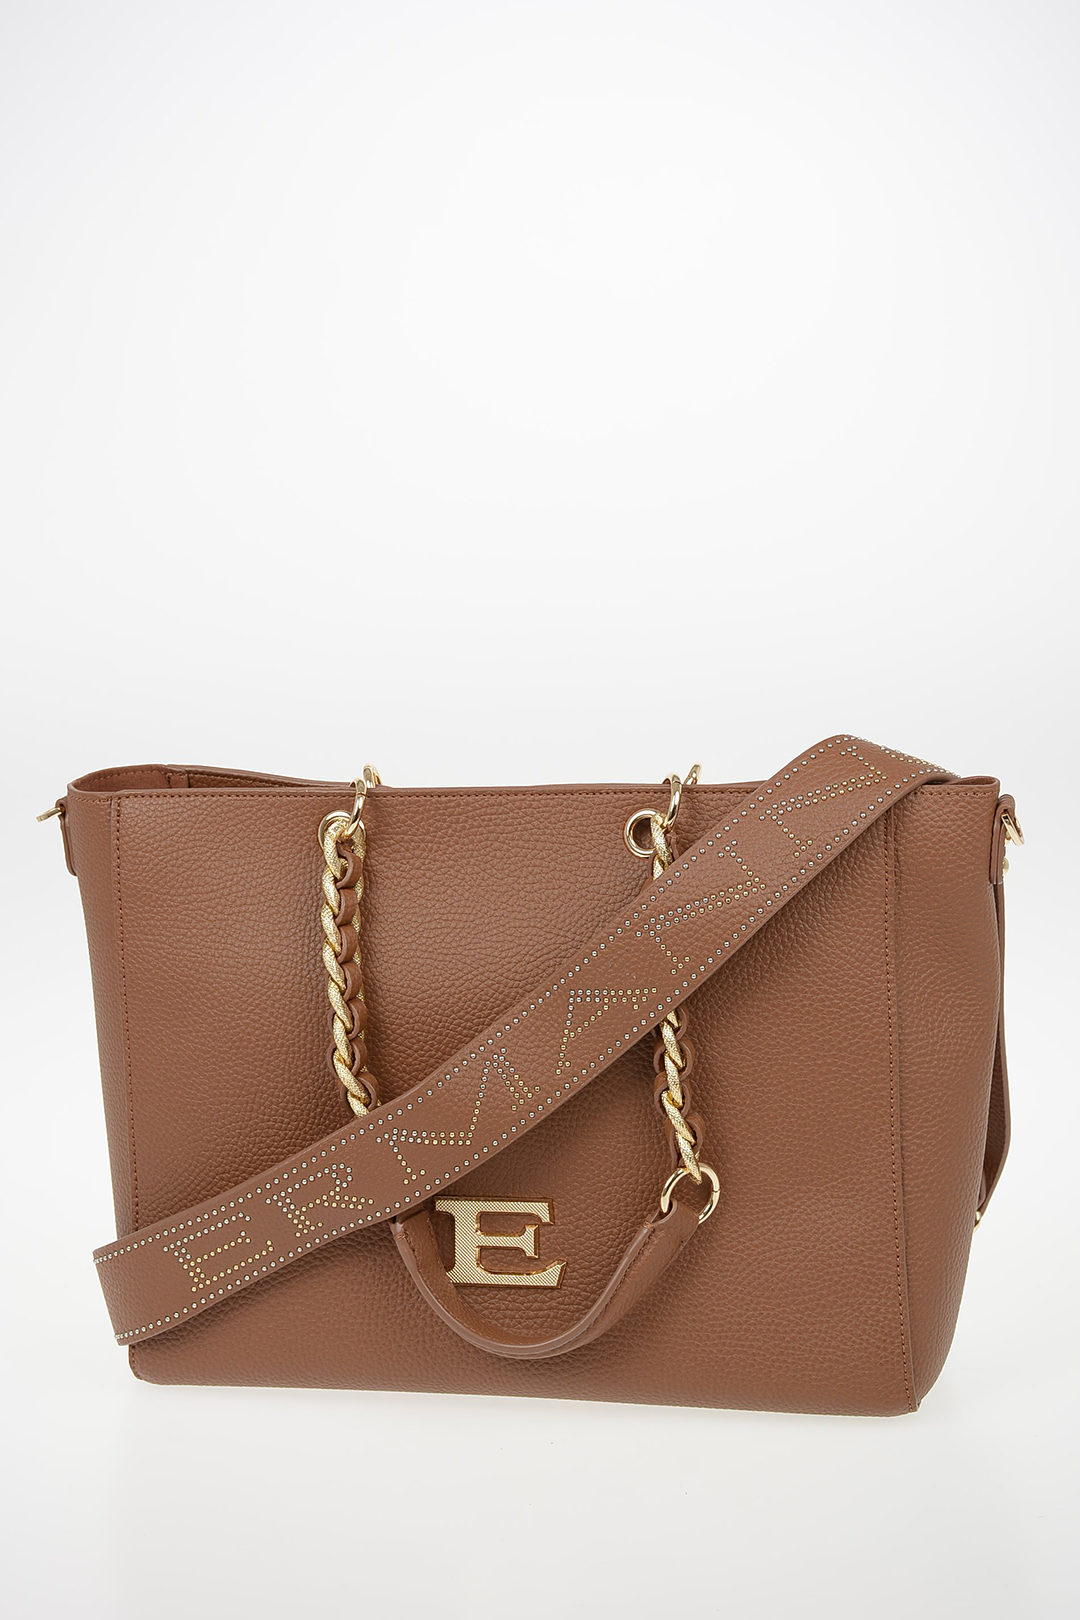 Details about   ERMANNO SCERVINO women Handbags ERMANNO Faux Leather FLAP EBA Tote bag Burgundy